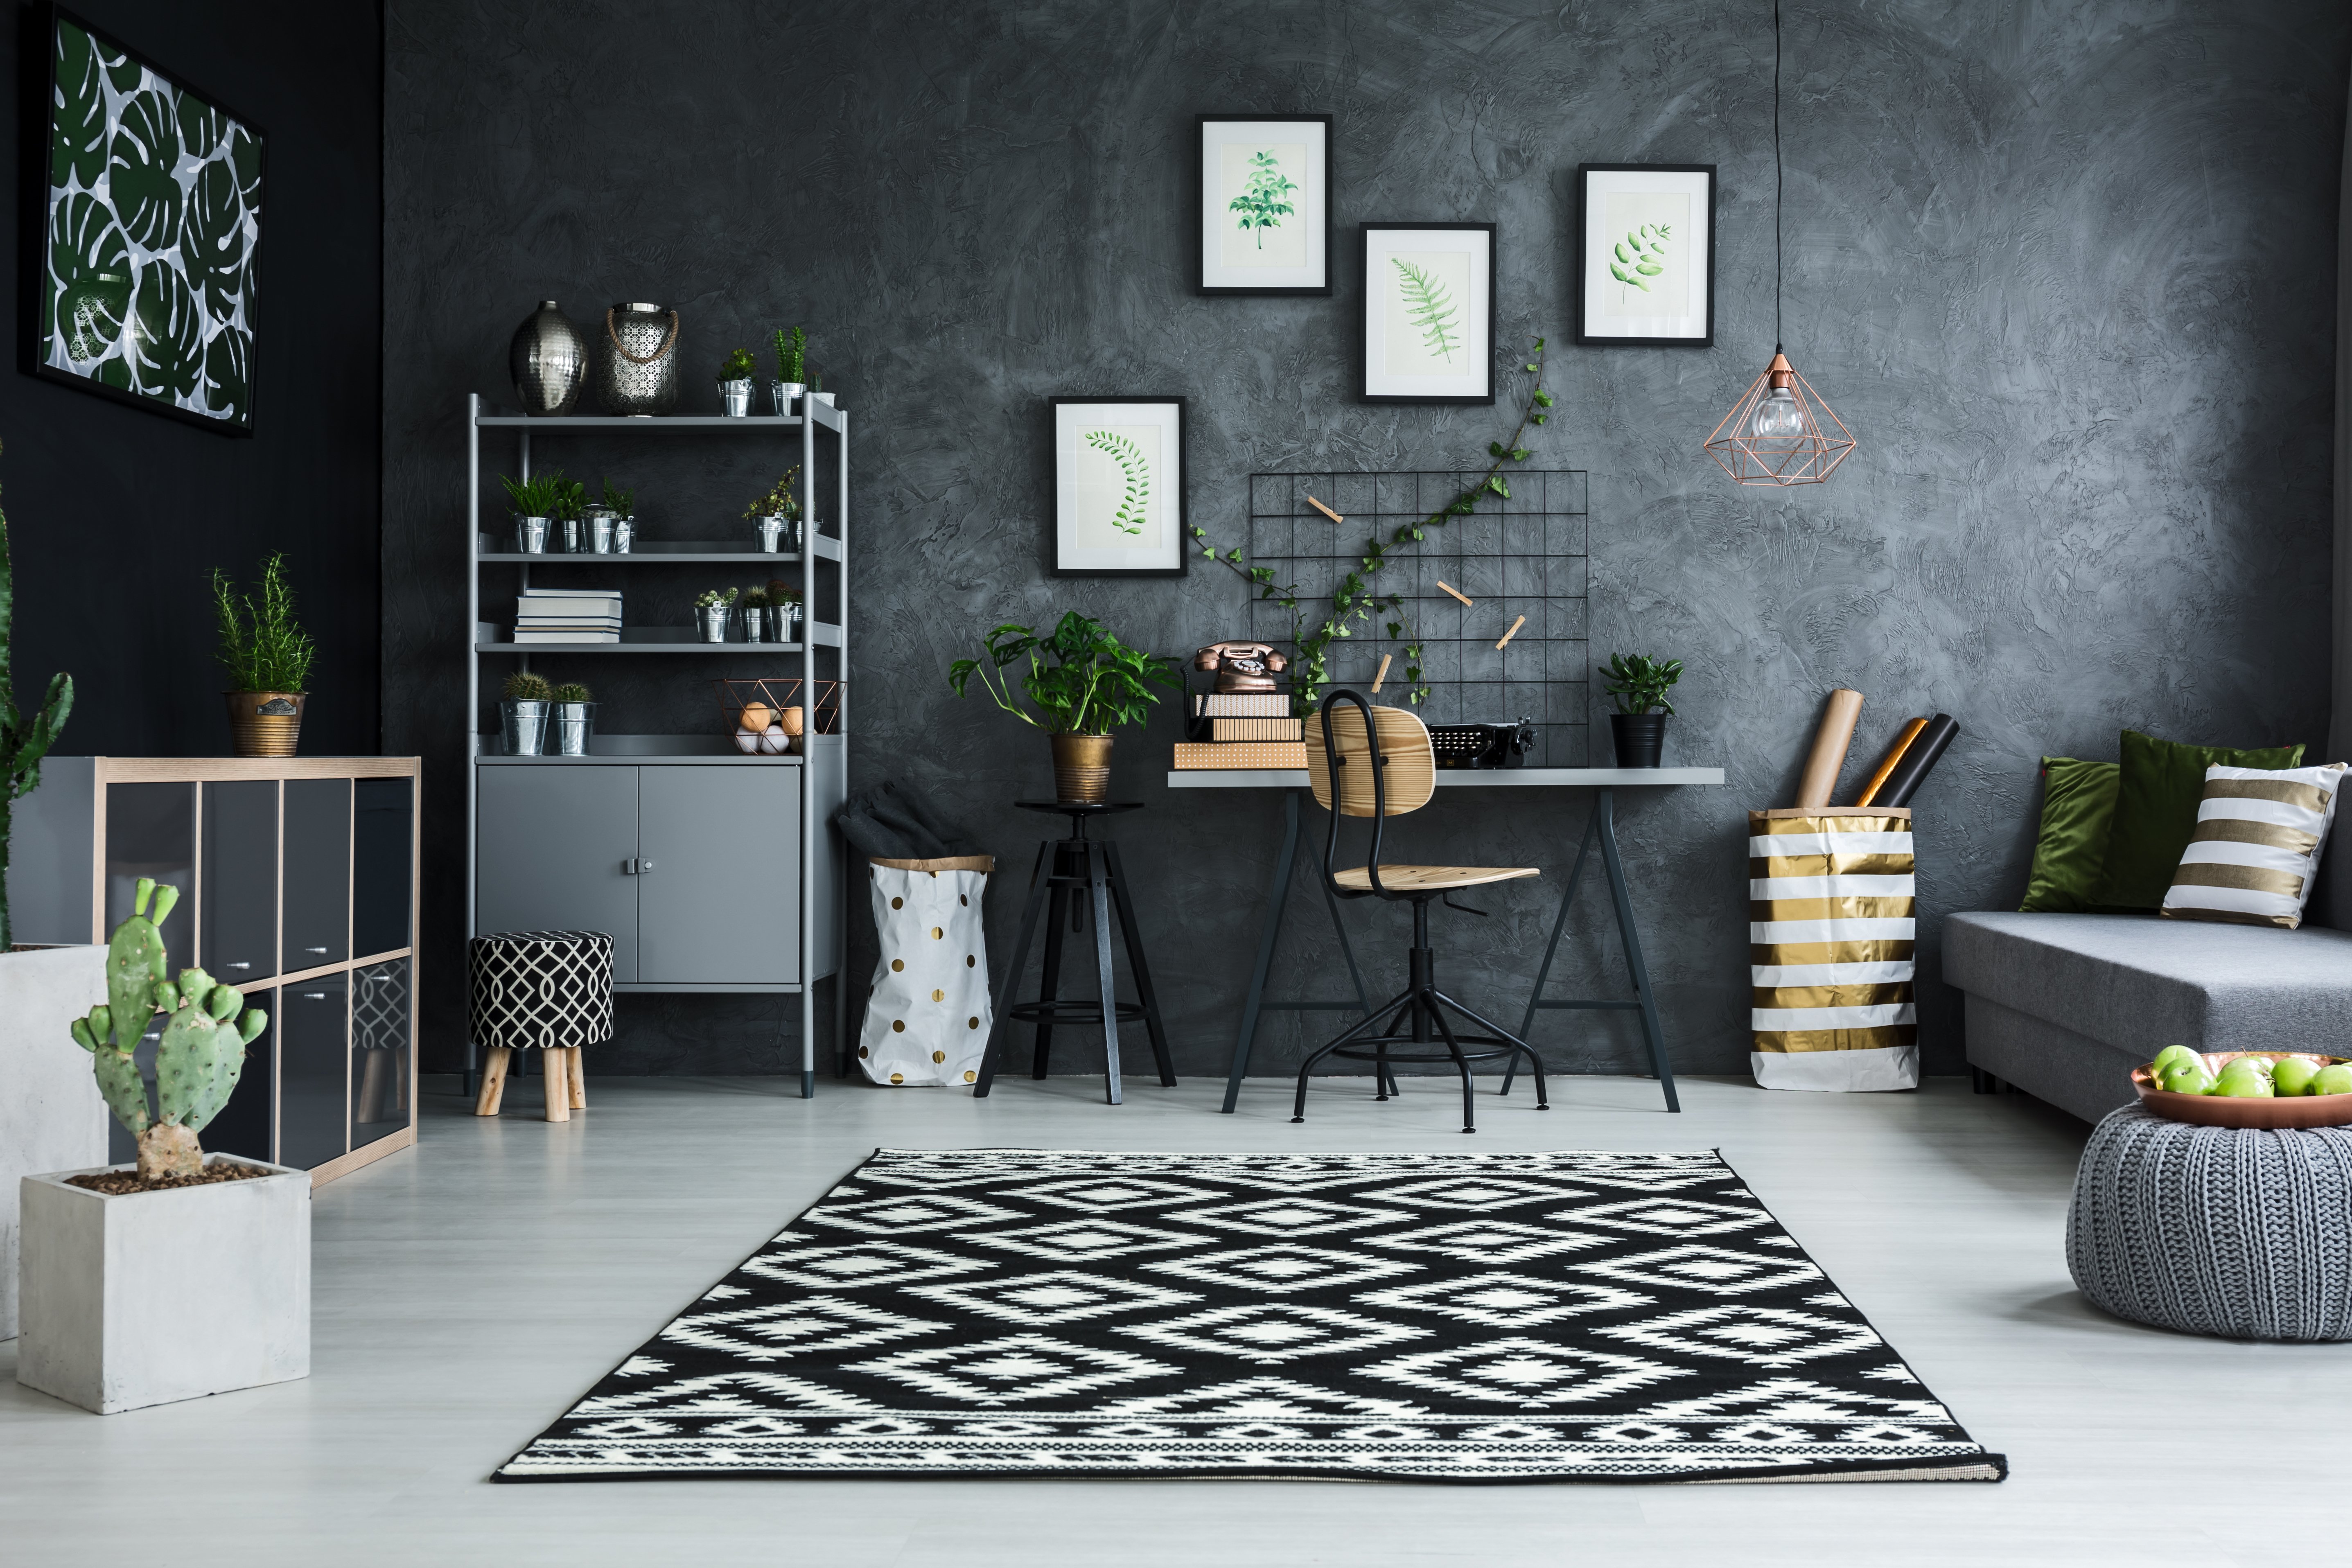 20 New Wall Designs For The Living Room In 2020 Homelane Blog